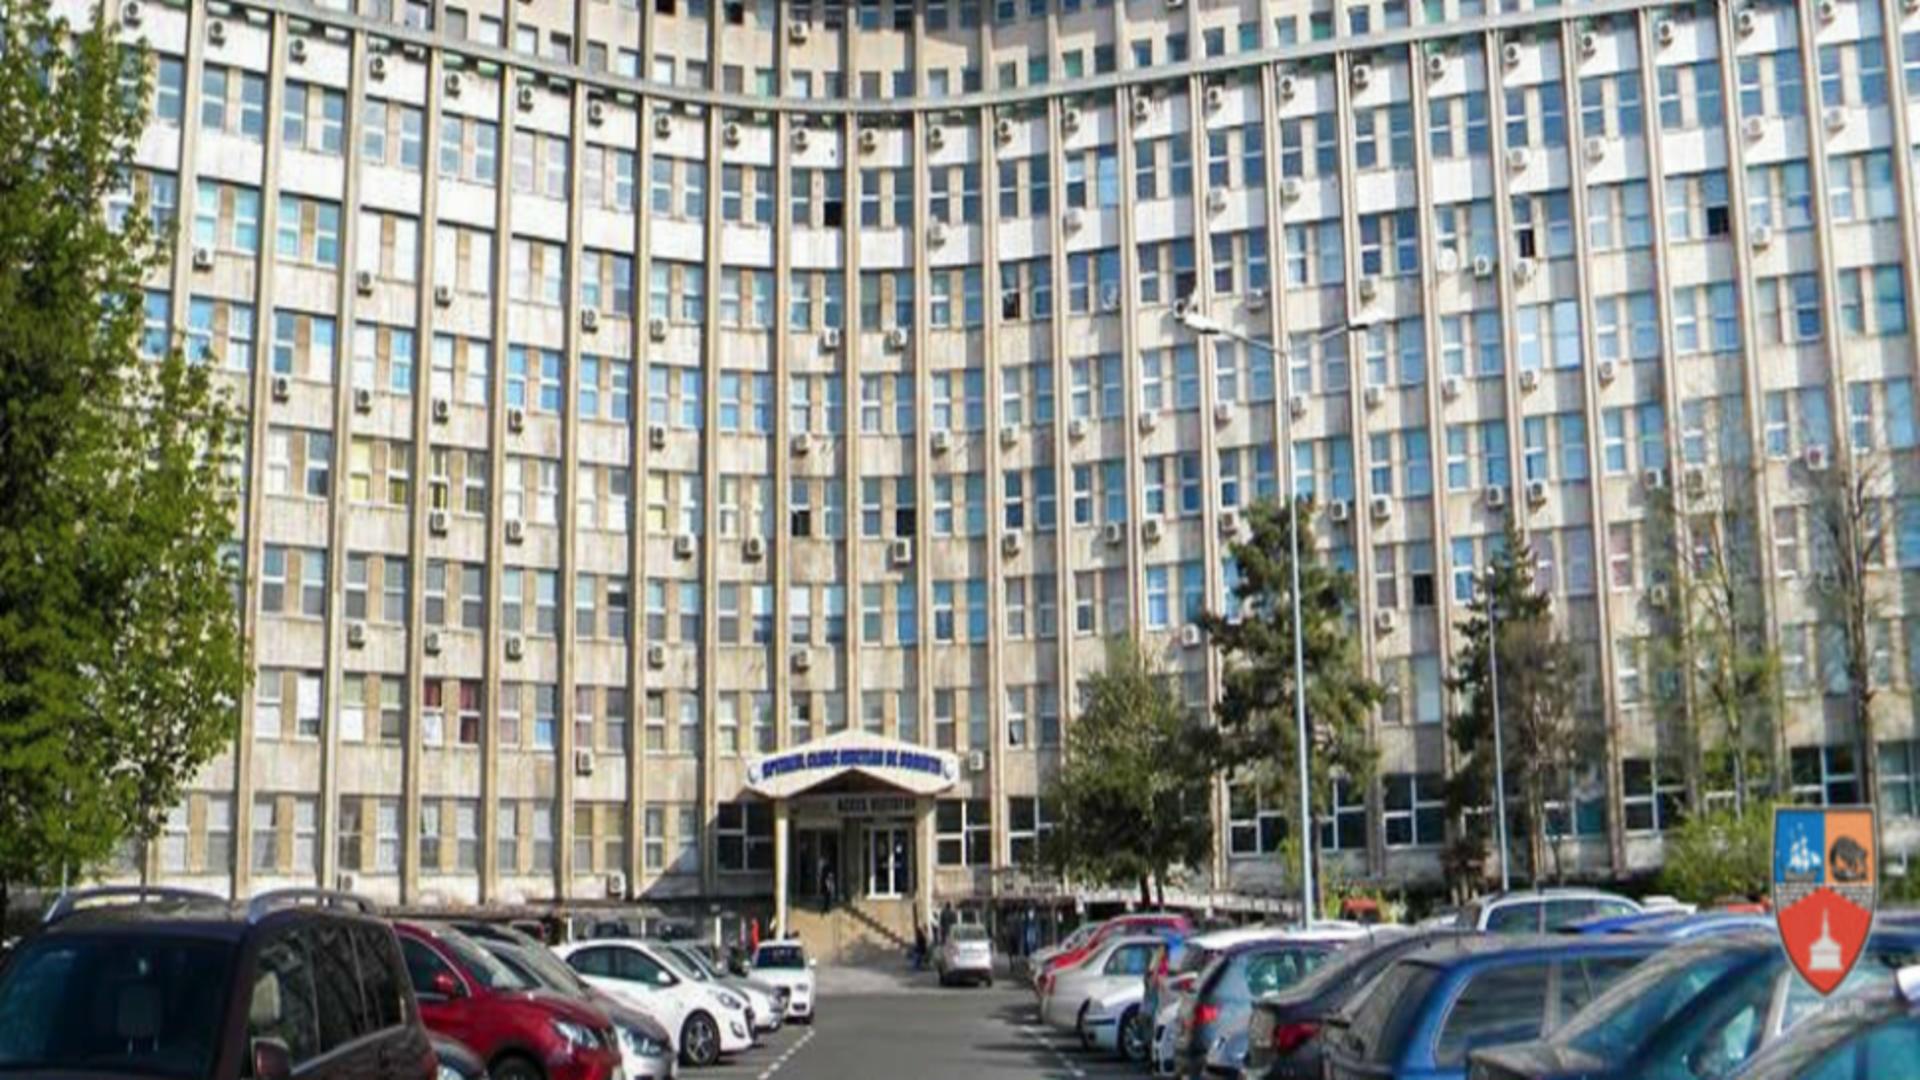 Spitalul Județean Constanța